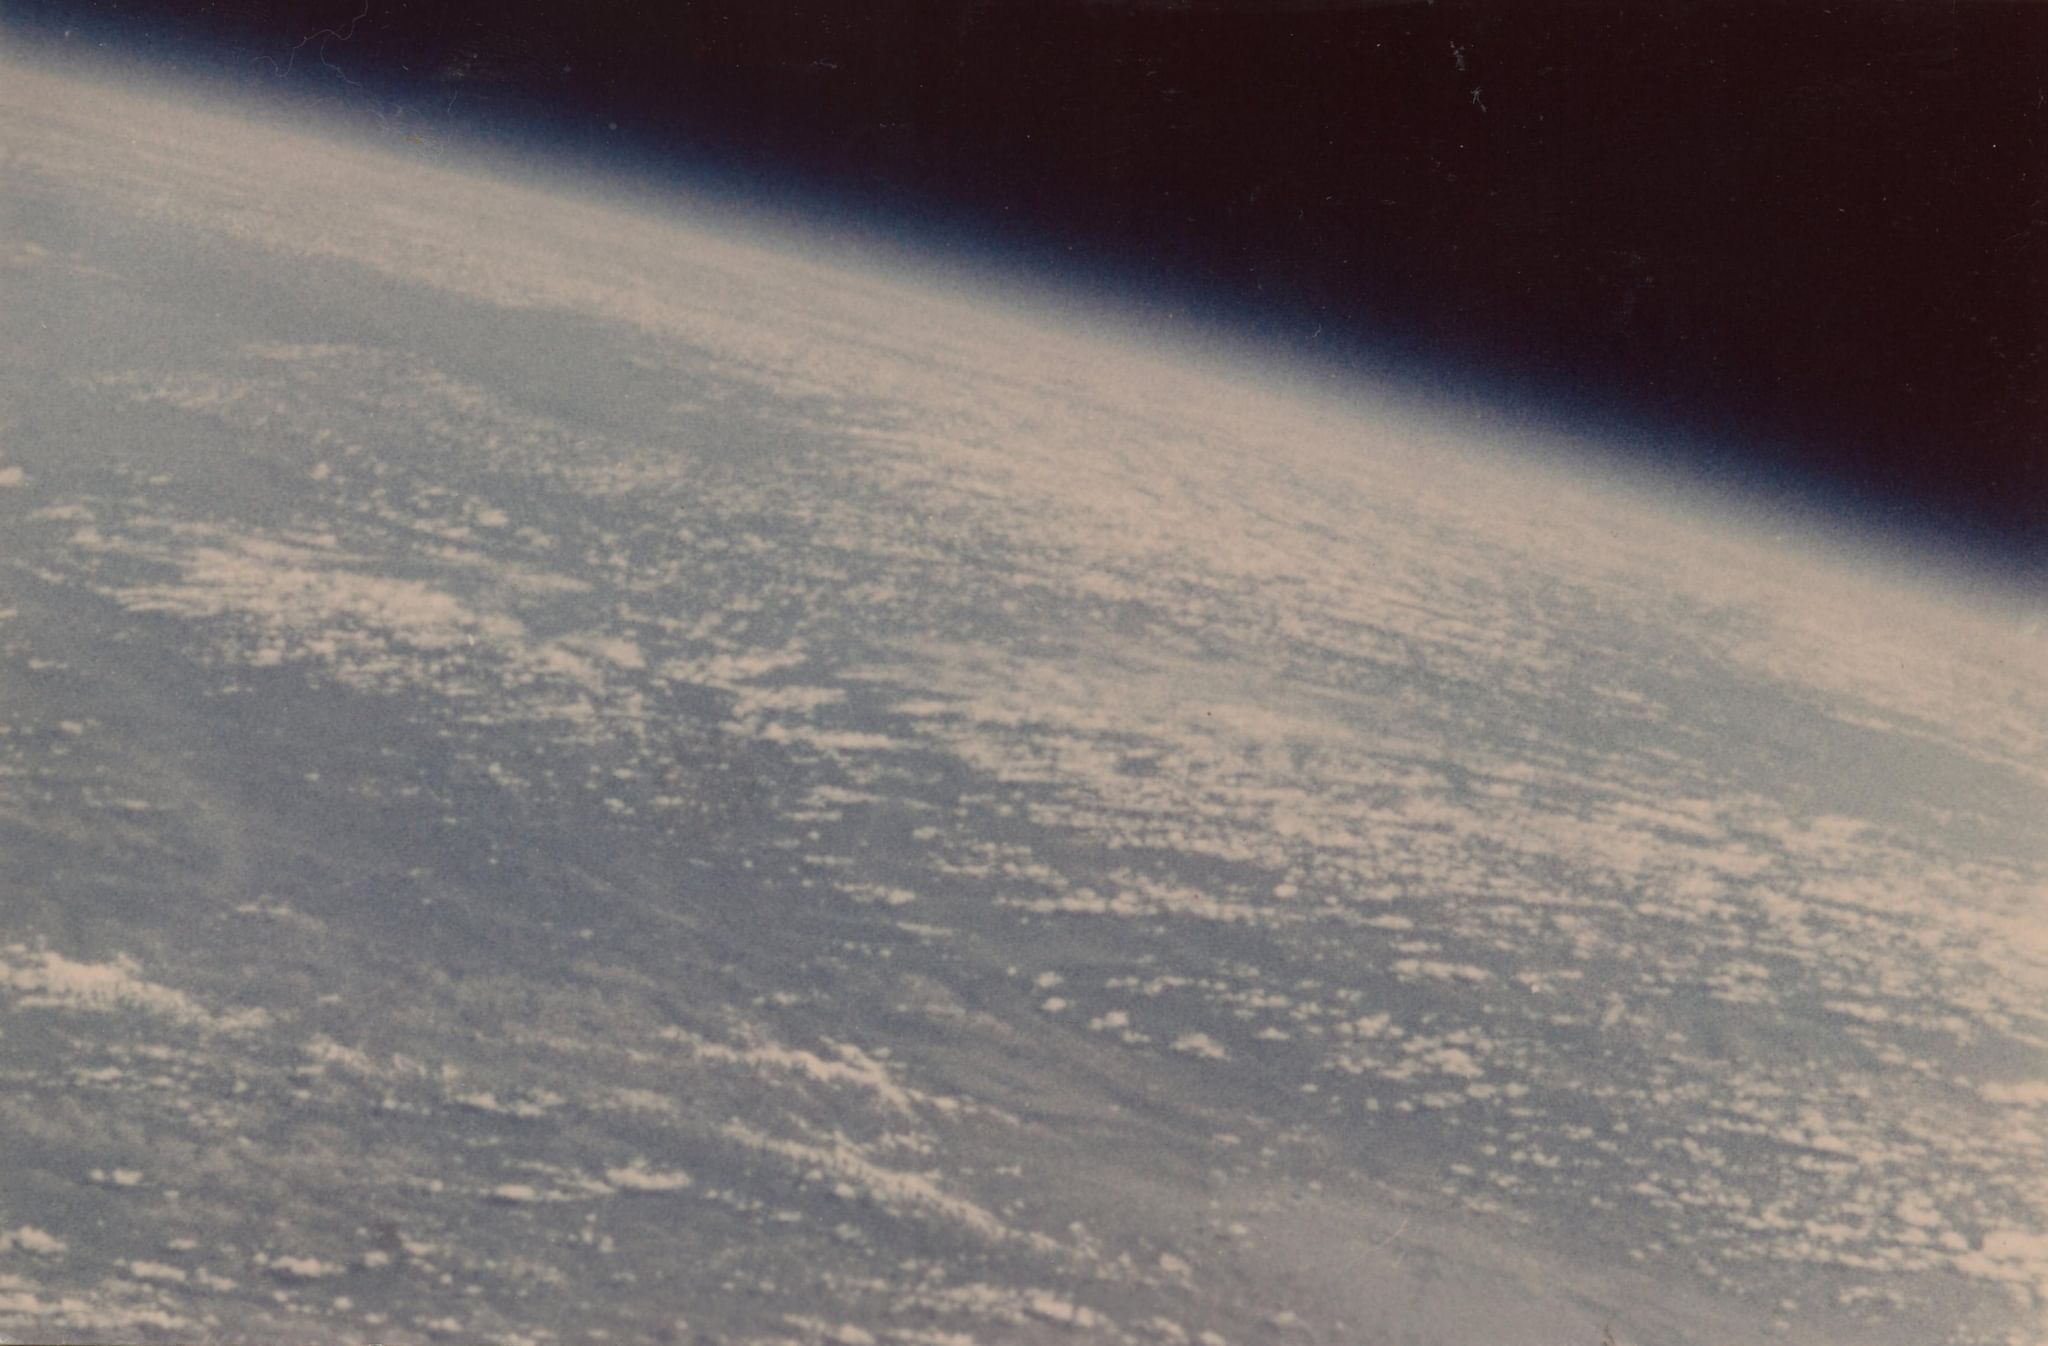 Снимки земли из космоса Титова